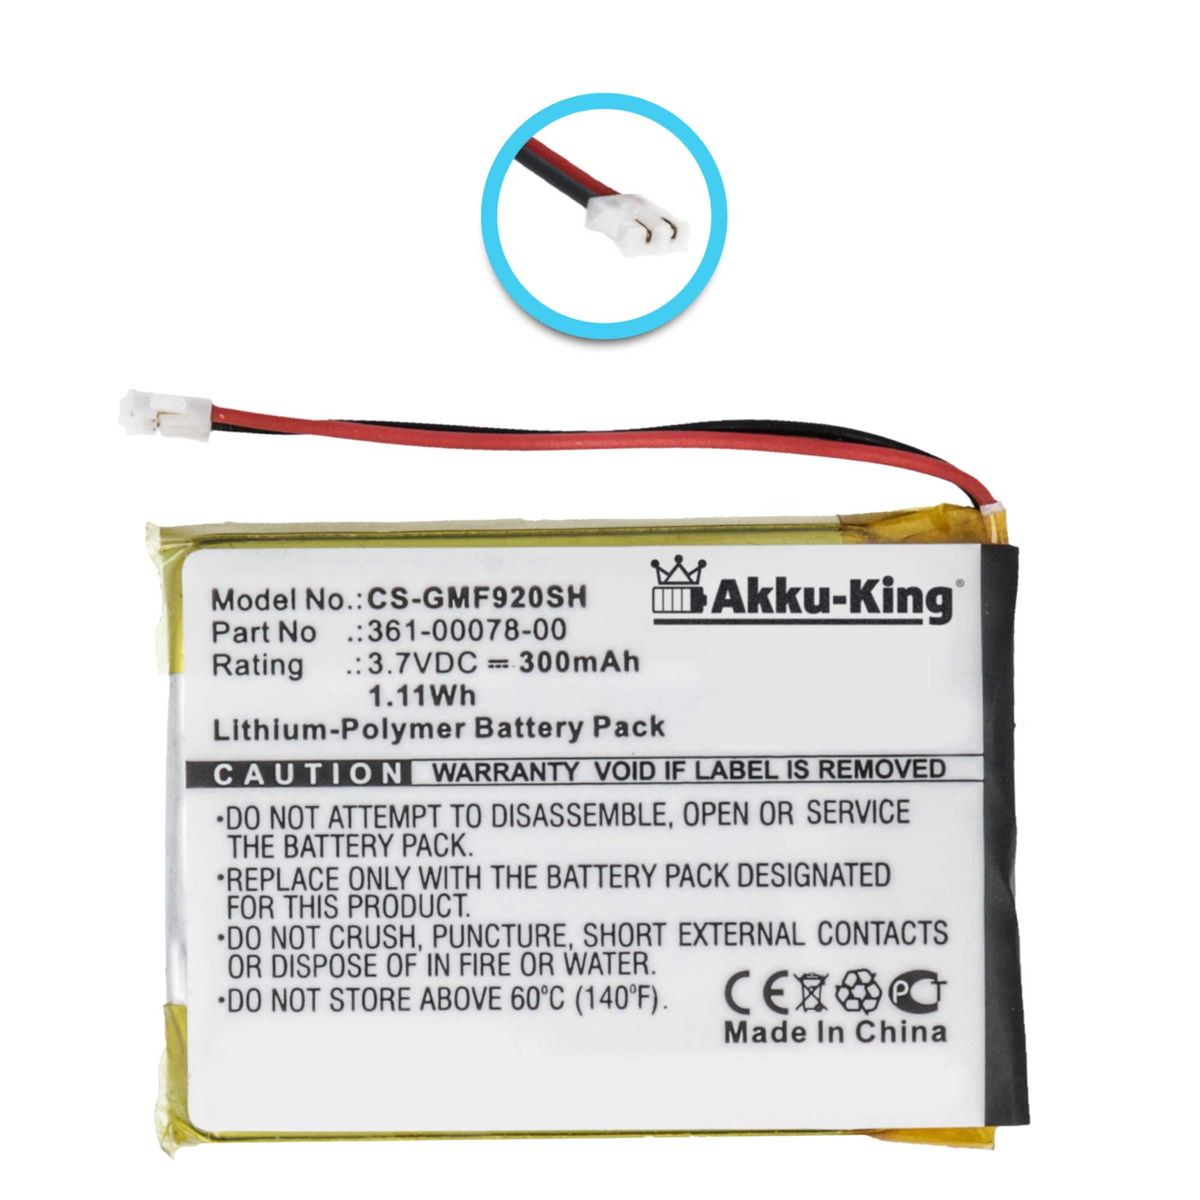 361-00078-00 AKKU-KING Akku Li-Polymer 3.7 Garmin mit Smartwatch-Akku, kompatibel Volt, 300mAh